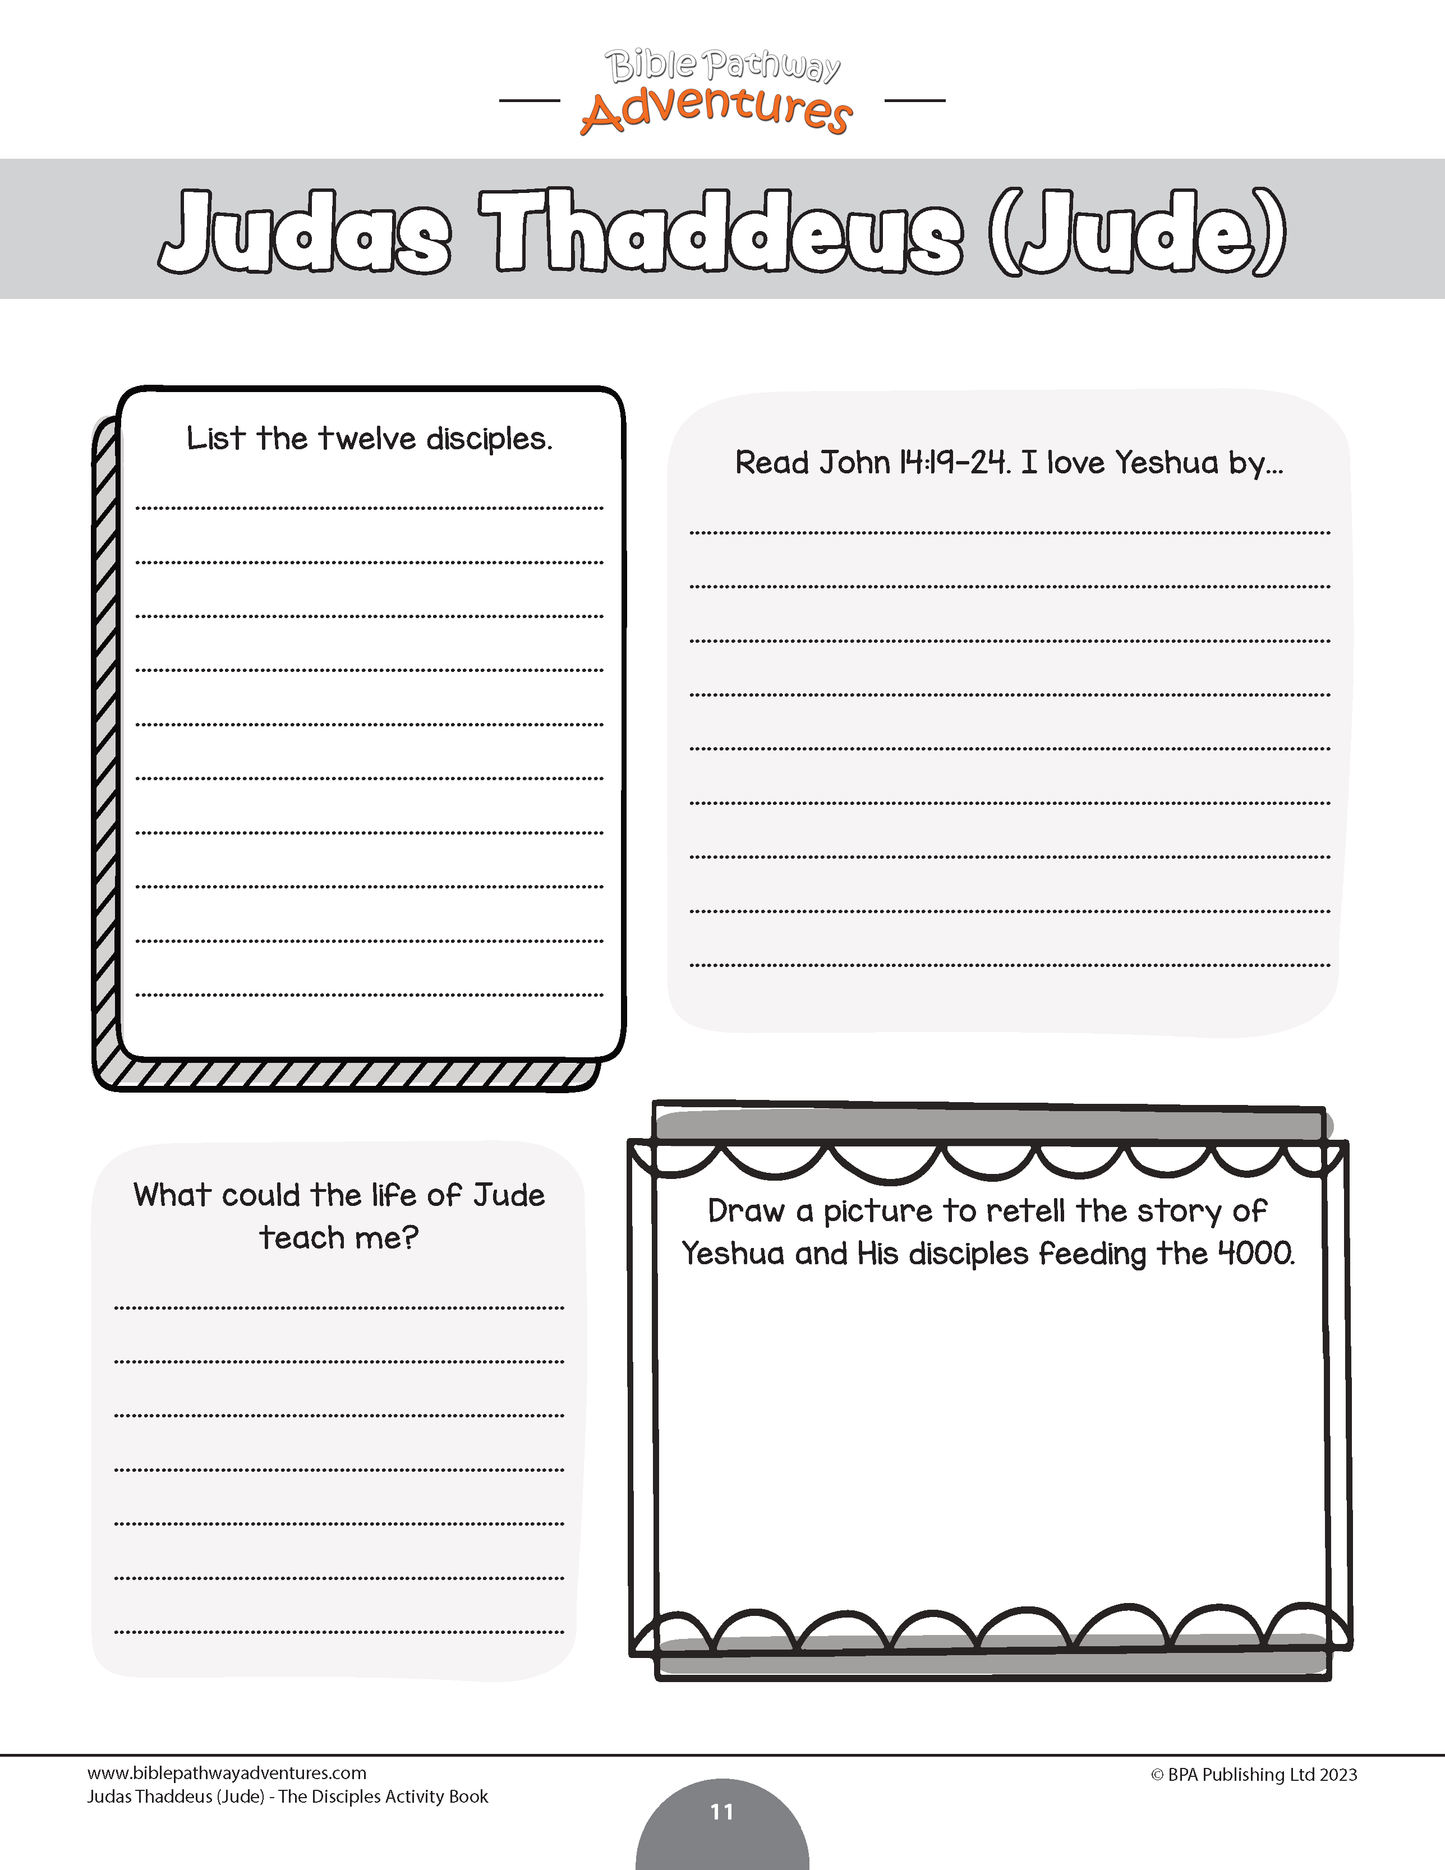 Judas Thaddeus (Jude): The Disciple Activity Book (PDF)